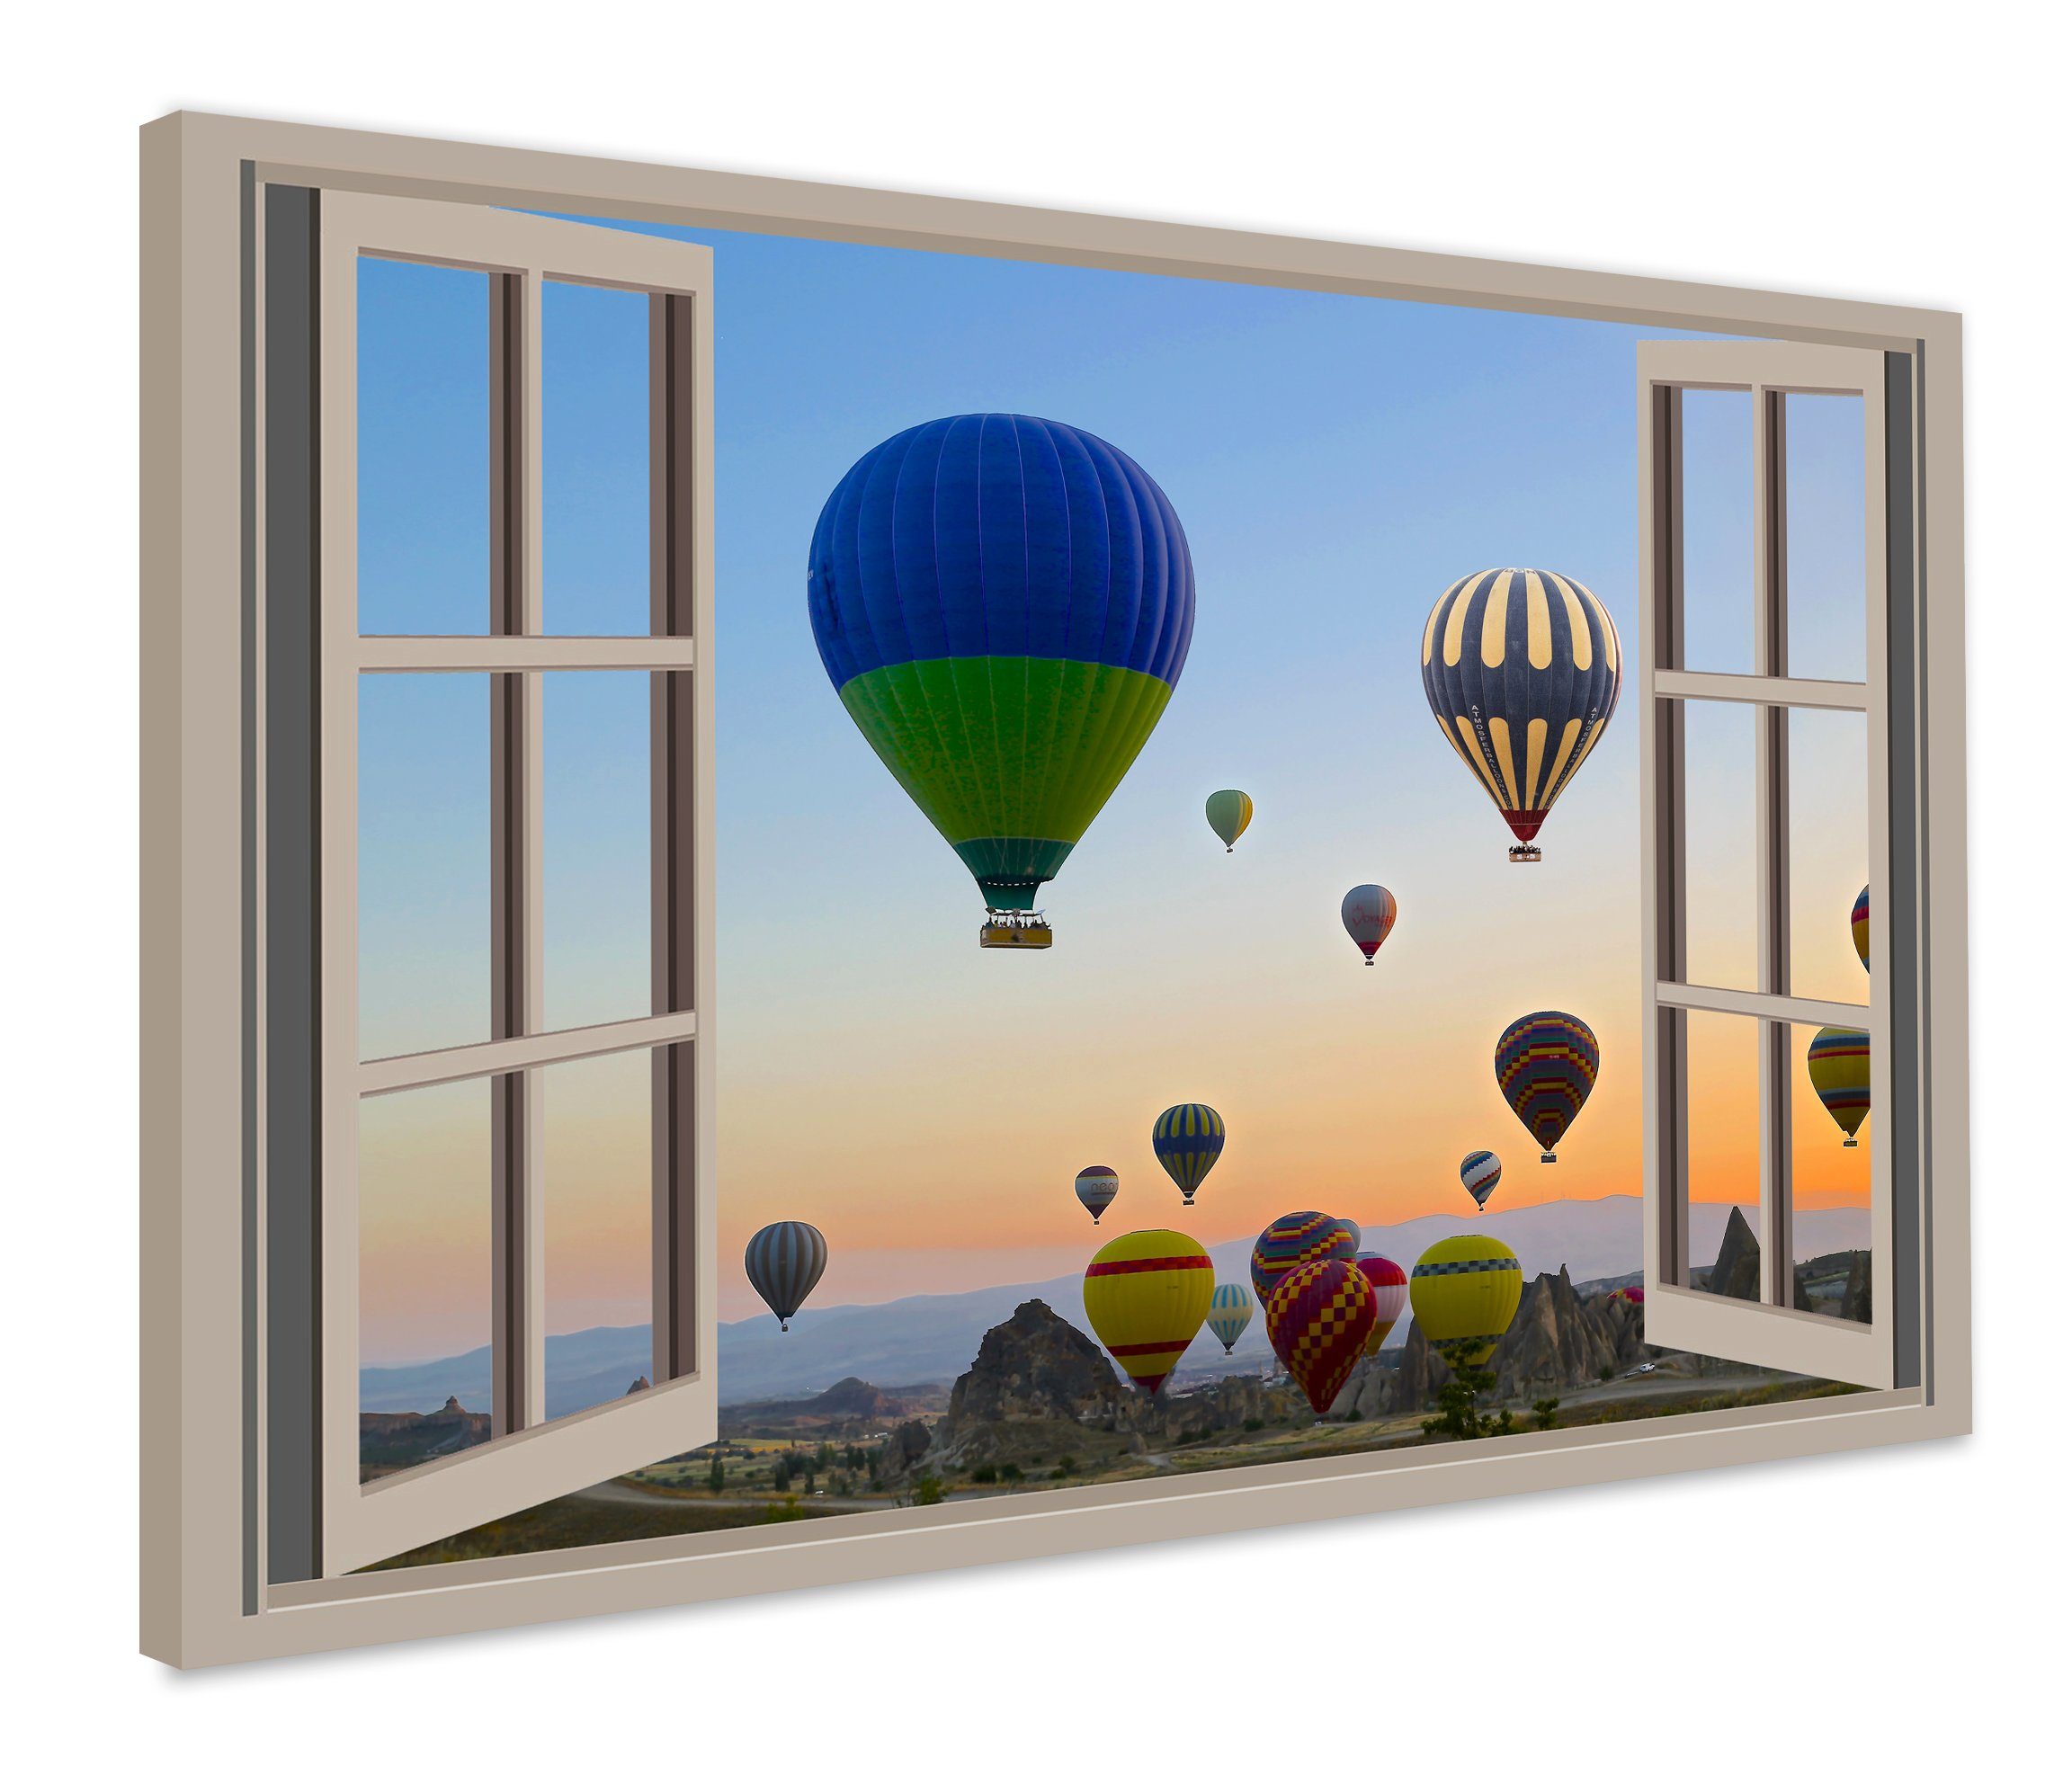 Leinwando Leinwandbild Gemälde / Fensterblick auf Heißluftballons - Moderne Kunst / Wanddekoration fertig zum aufhängen